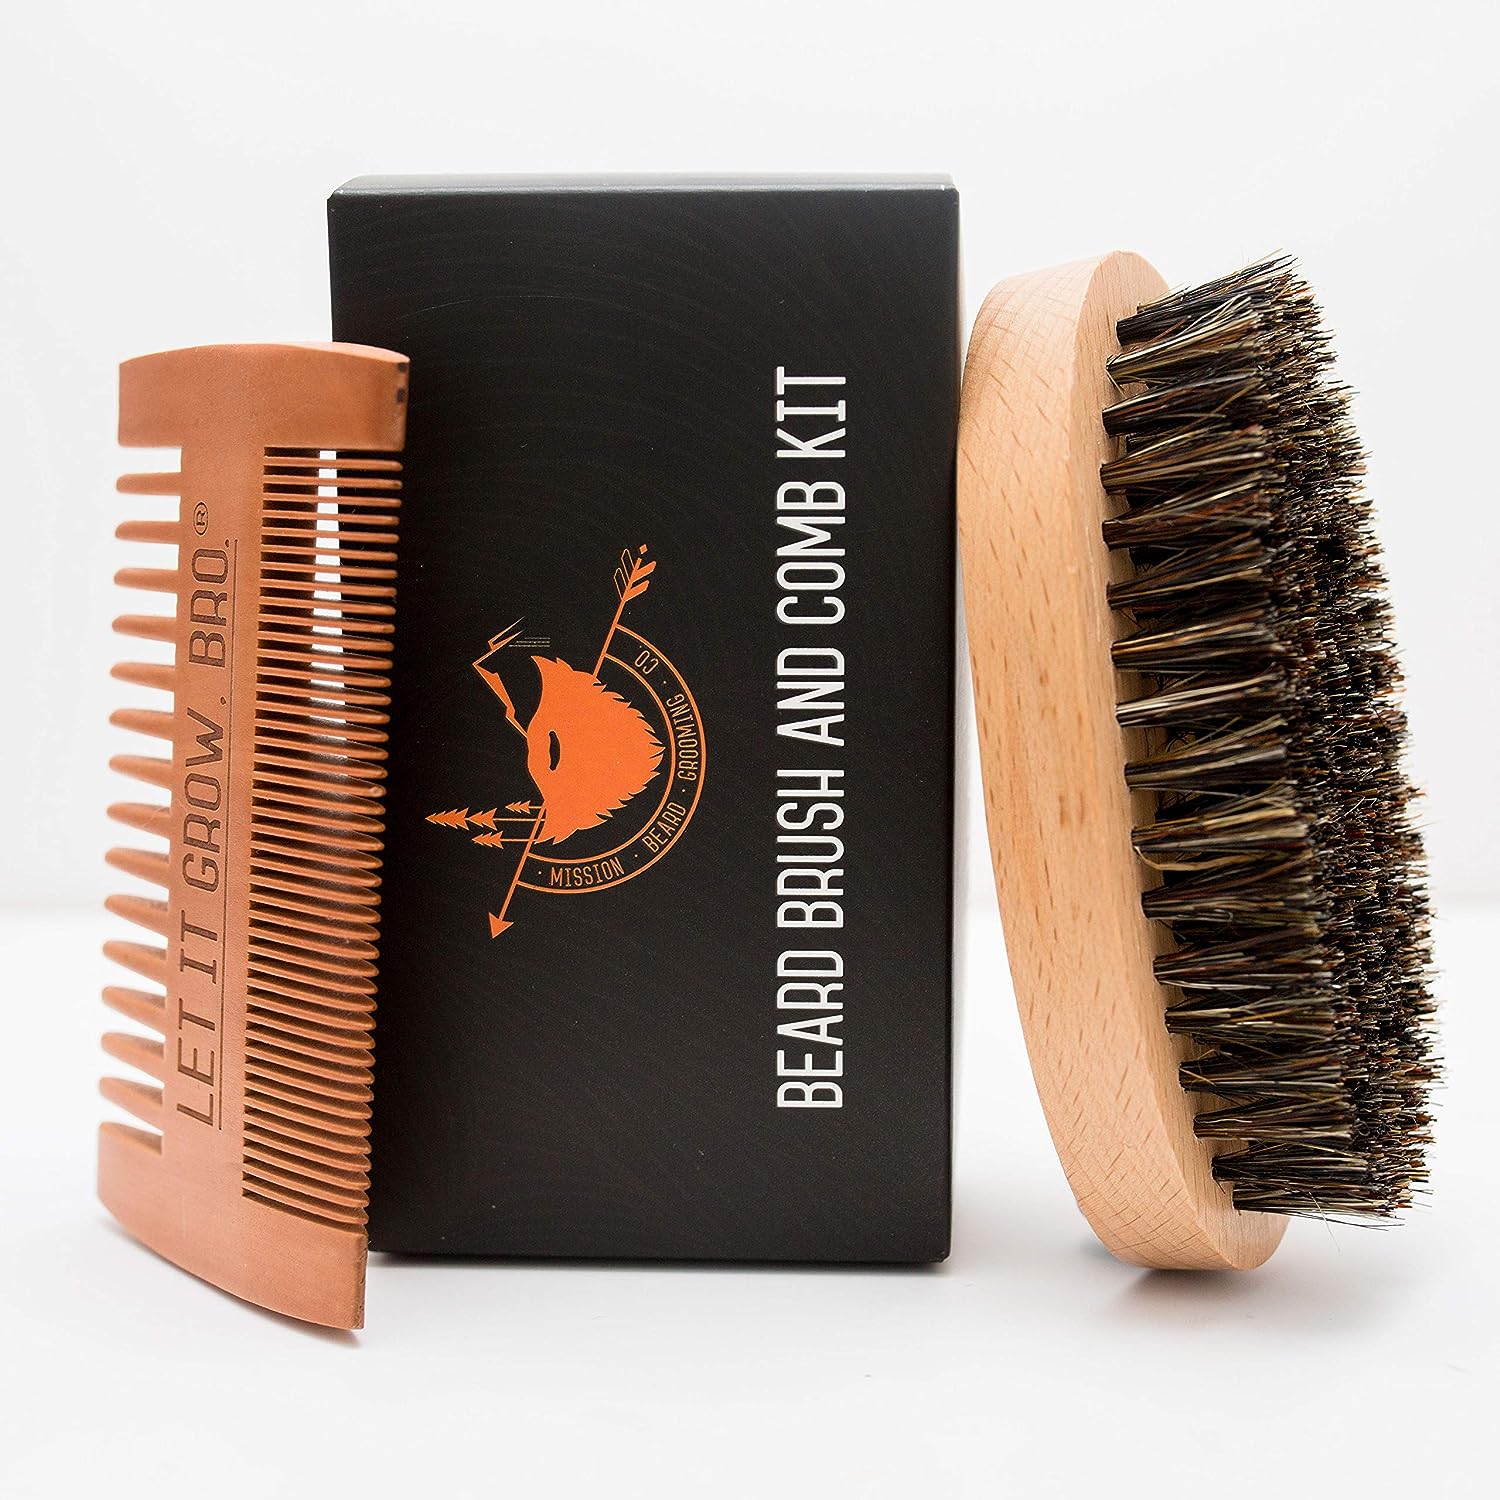 MISSION BEARD GROOMING CO. 100% Boar Bristle Beard Brush & Comb Kit - Exfoliates Skin, Tames The Wildest Beards & Promotes Beard Growth